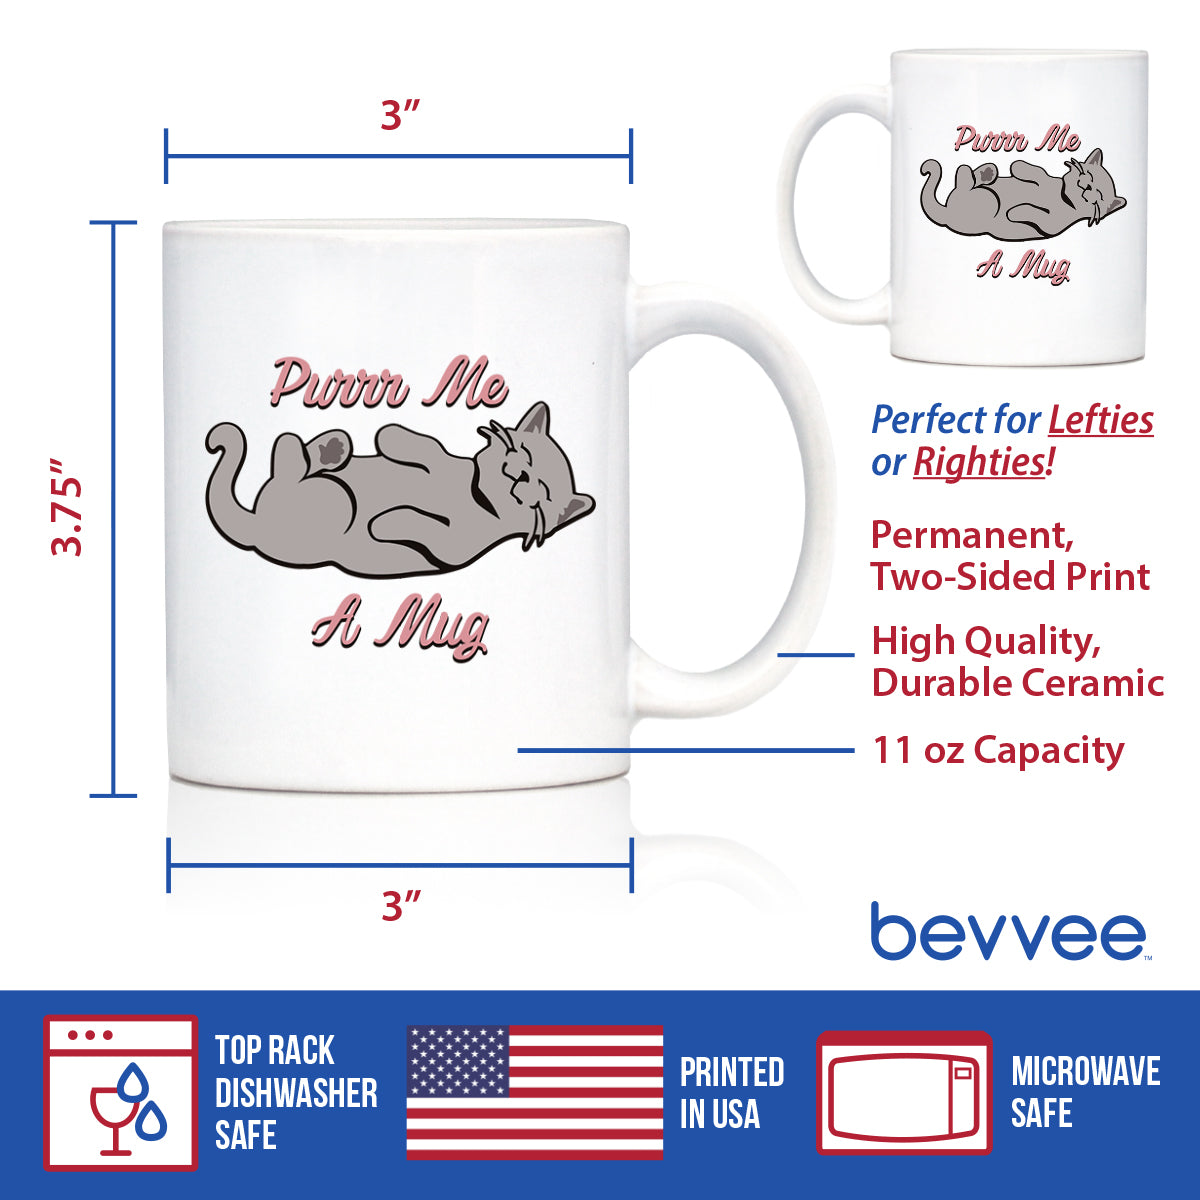 Purr Me A Mug – Cat Coffee Mug - Funny Gifts for Cat Moms